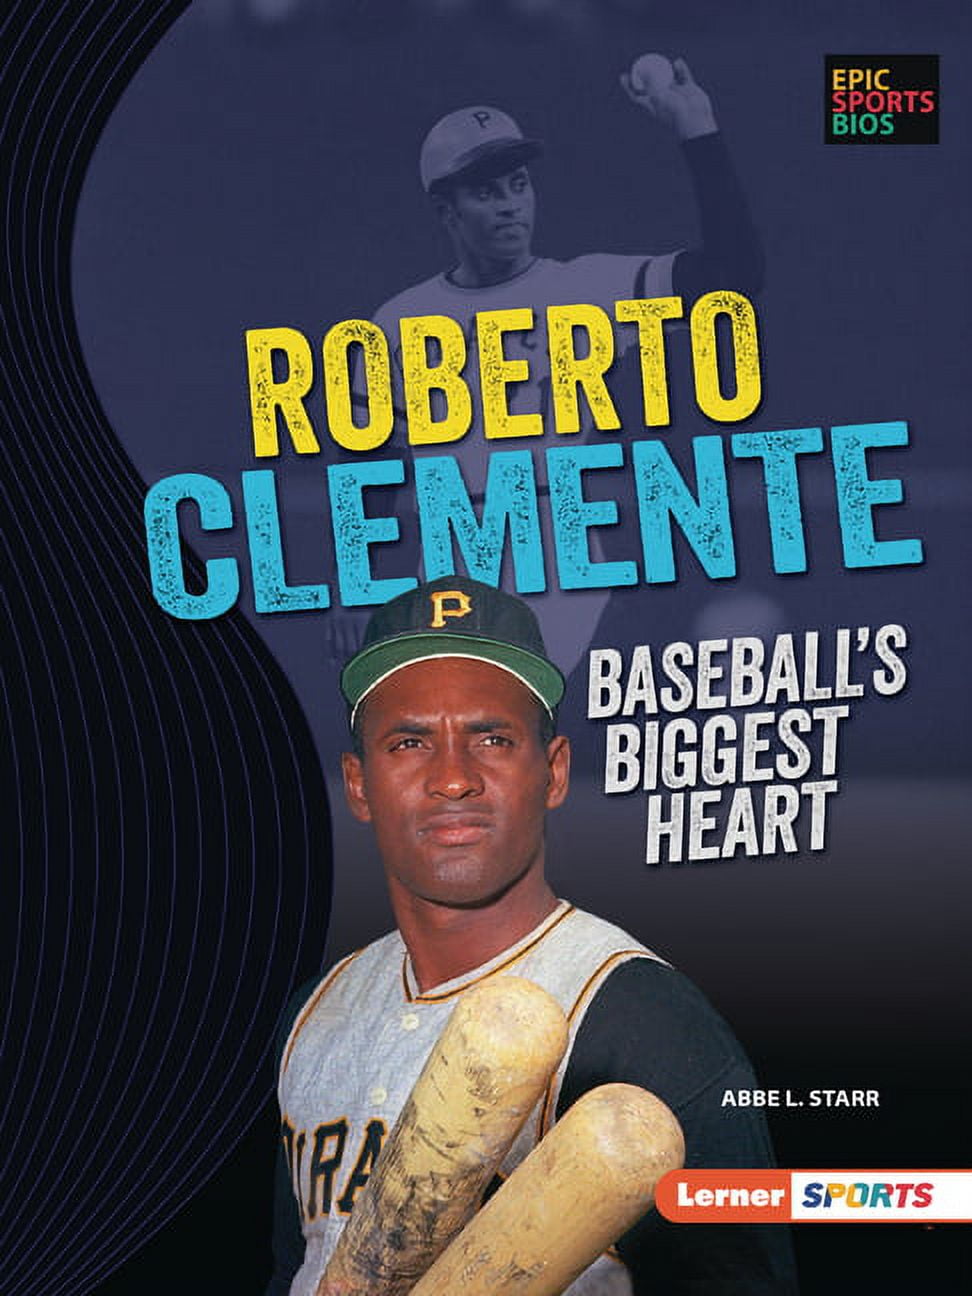 Roberto Clemente MLB Fan Shop